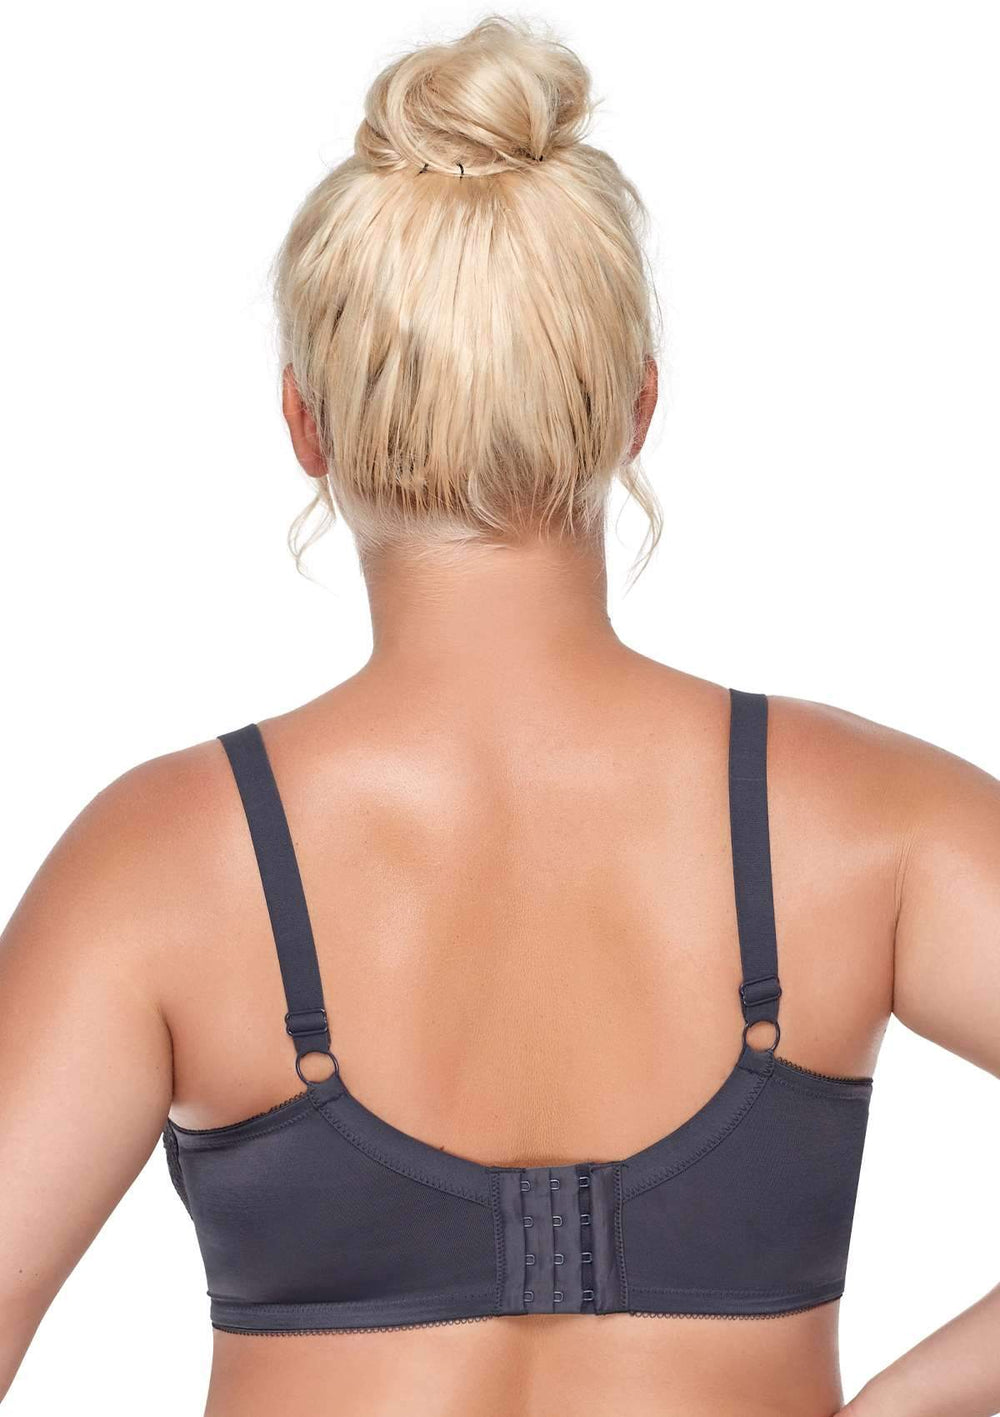 Buy BAICLOTHING Womens Minimizer Bra Big Size Lace Sheer Underwire